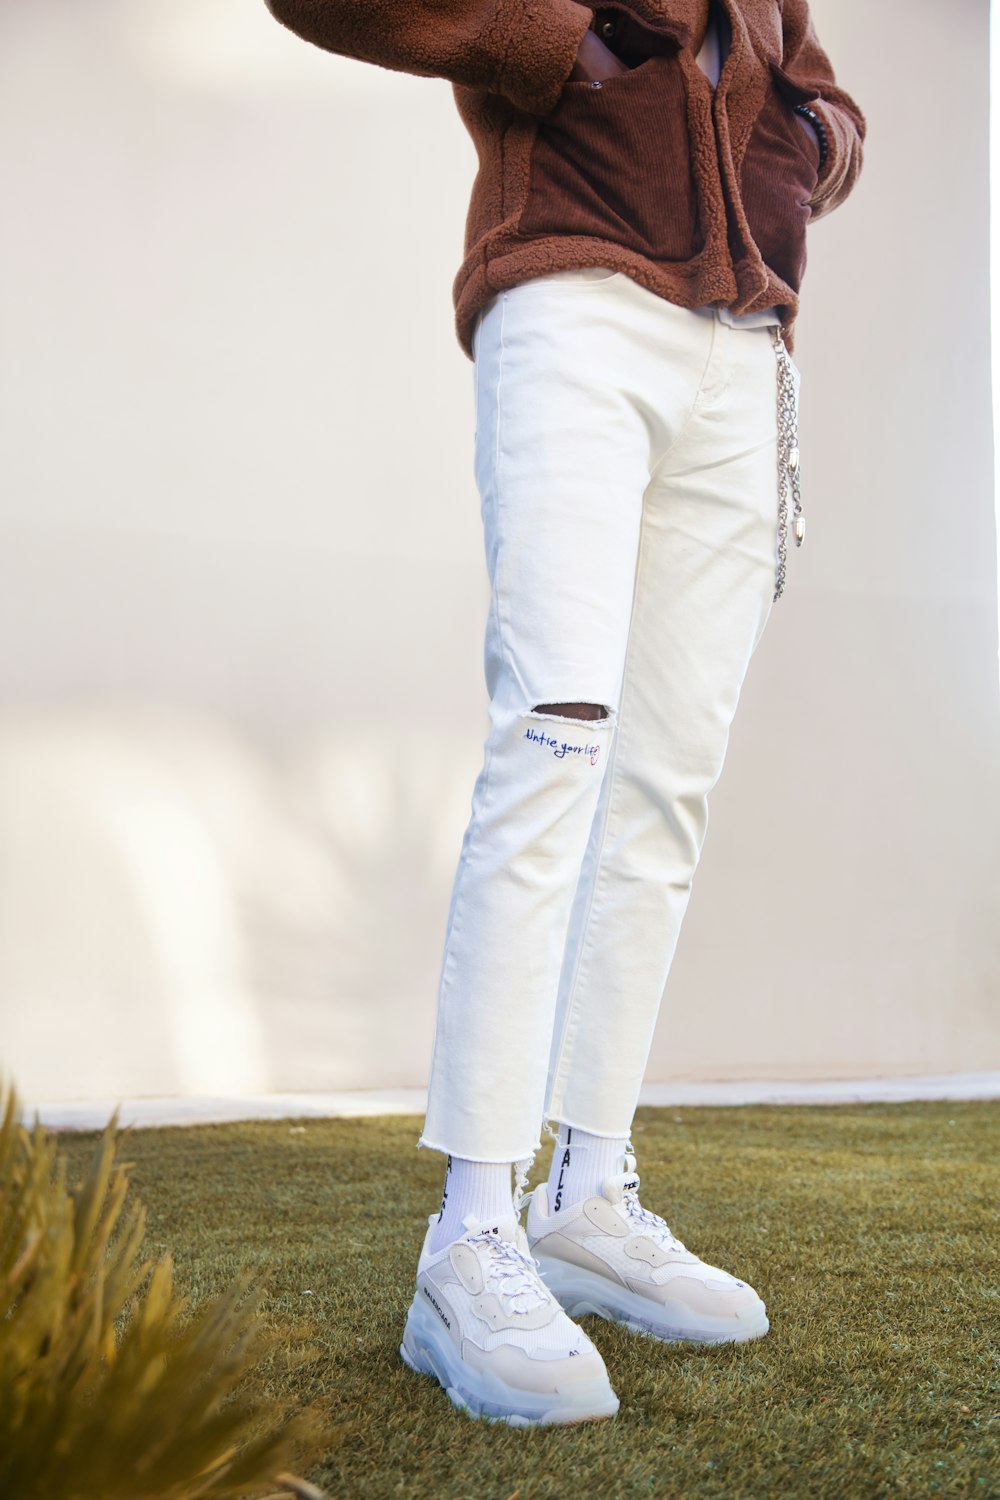 a person wearing white pants